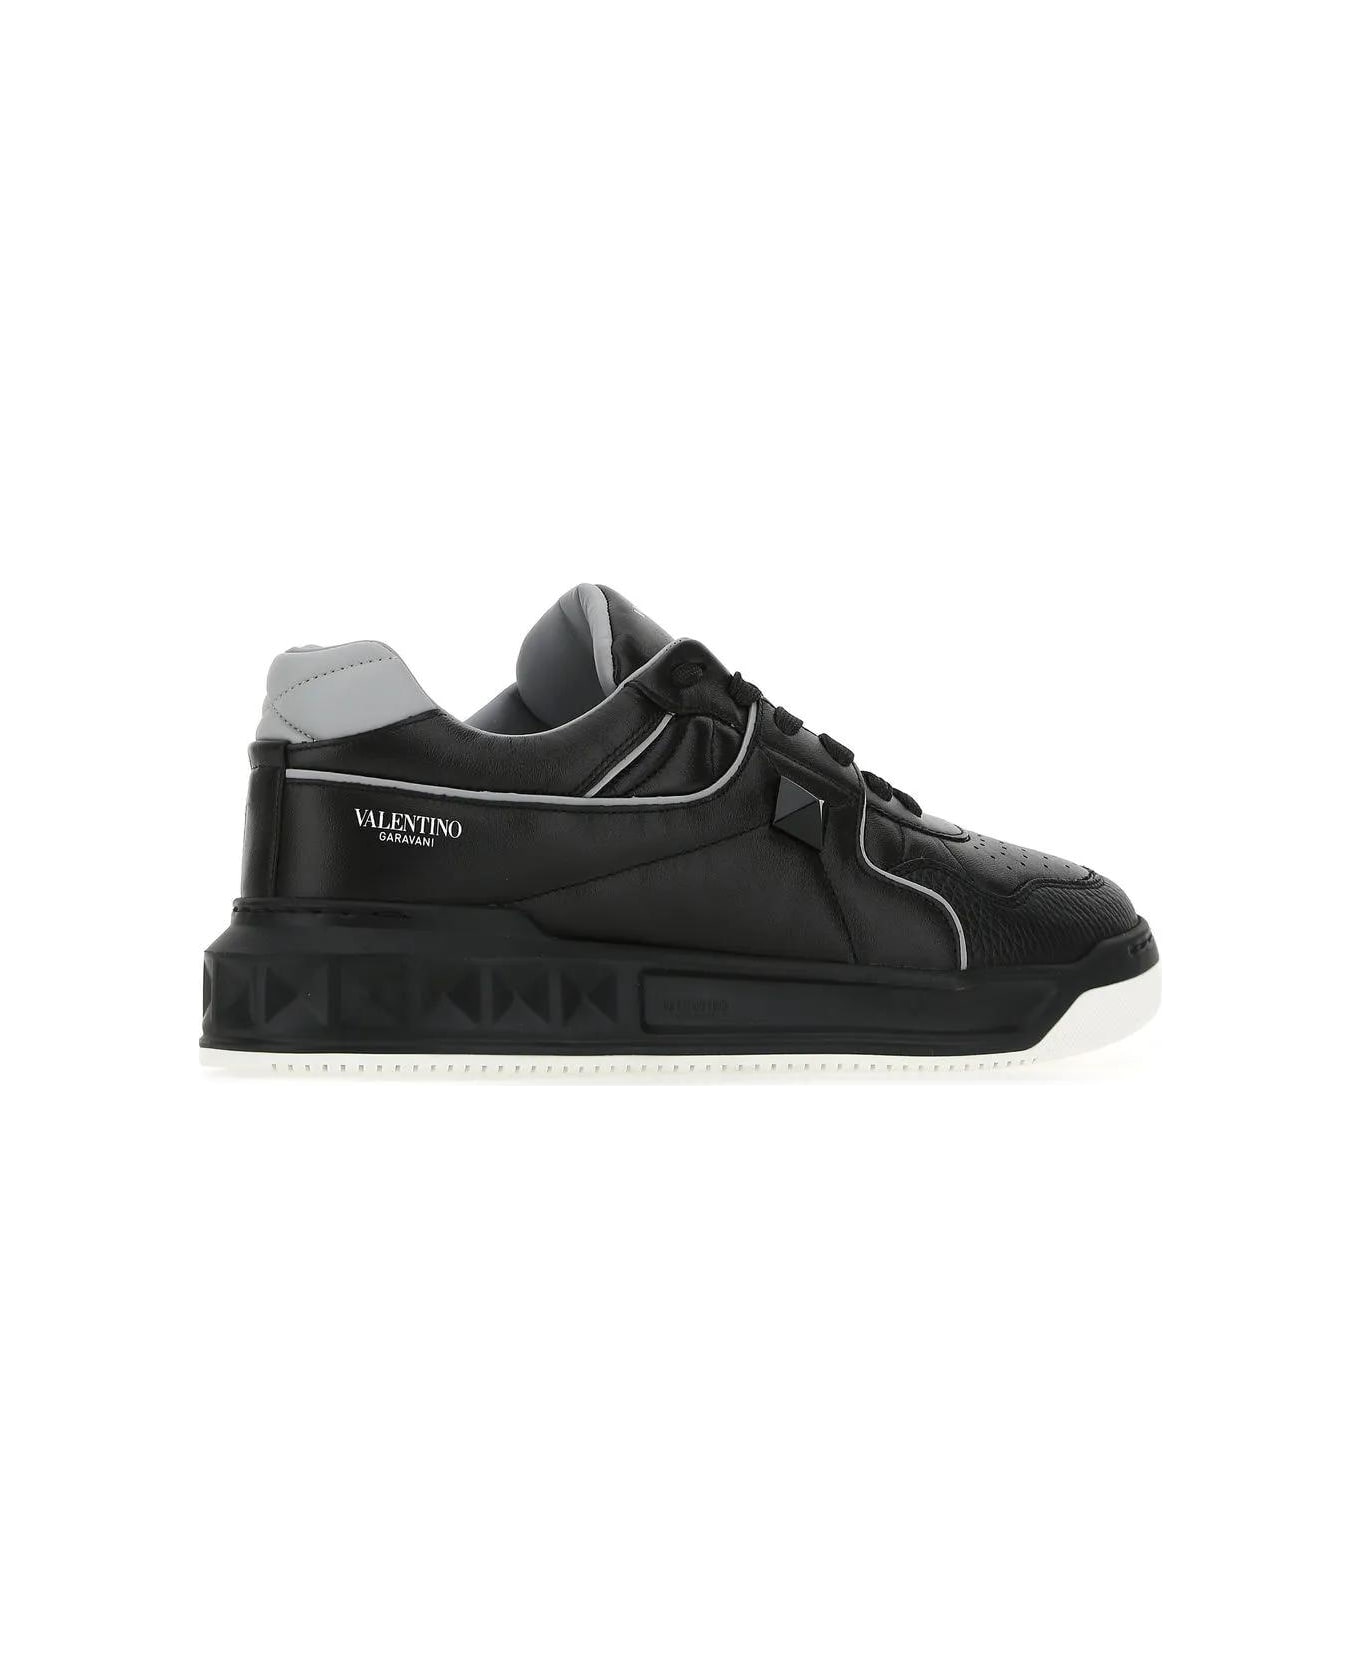 Valentino Garavani Black Nappa Leather One Stud Sneakers - Black